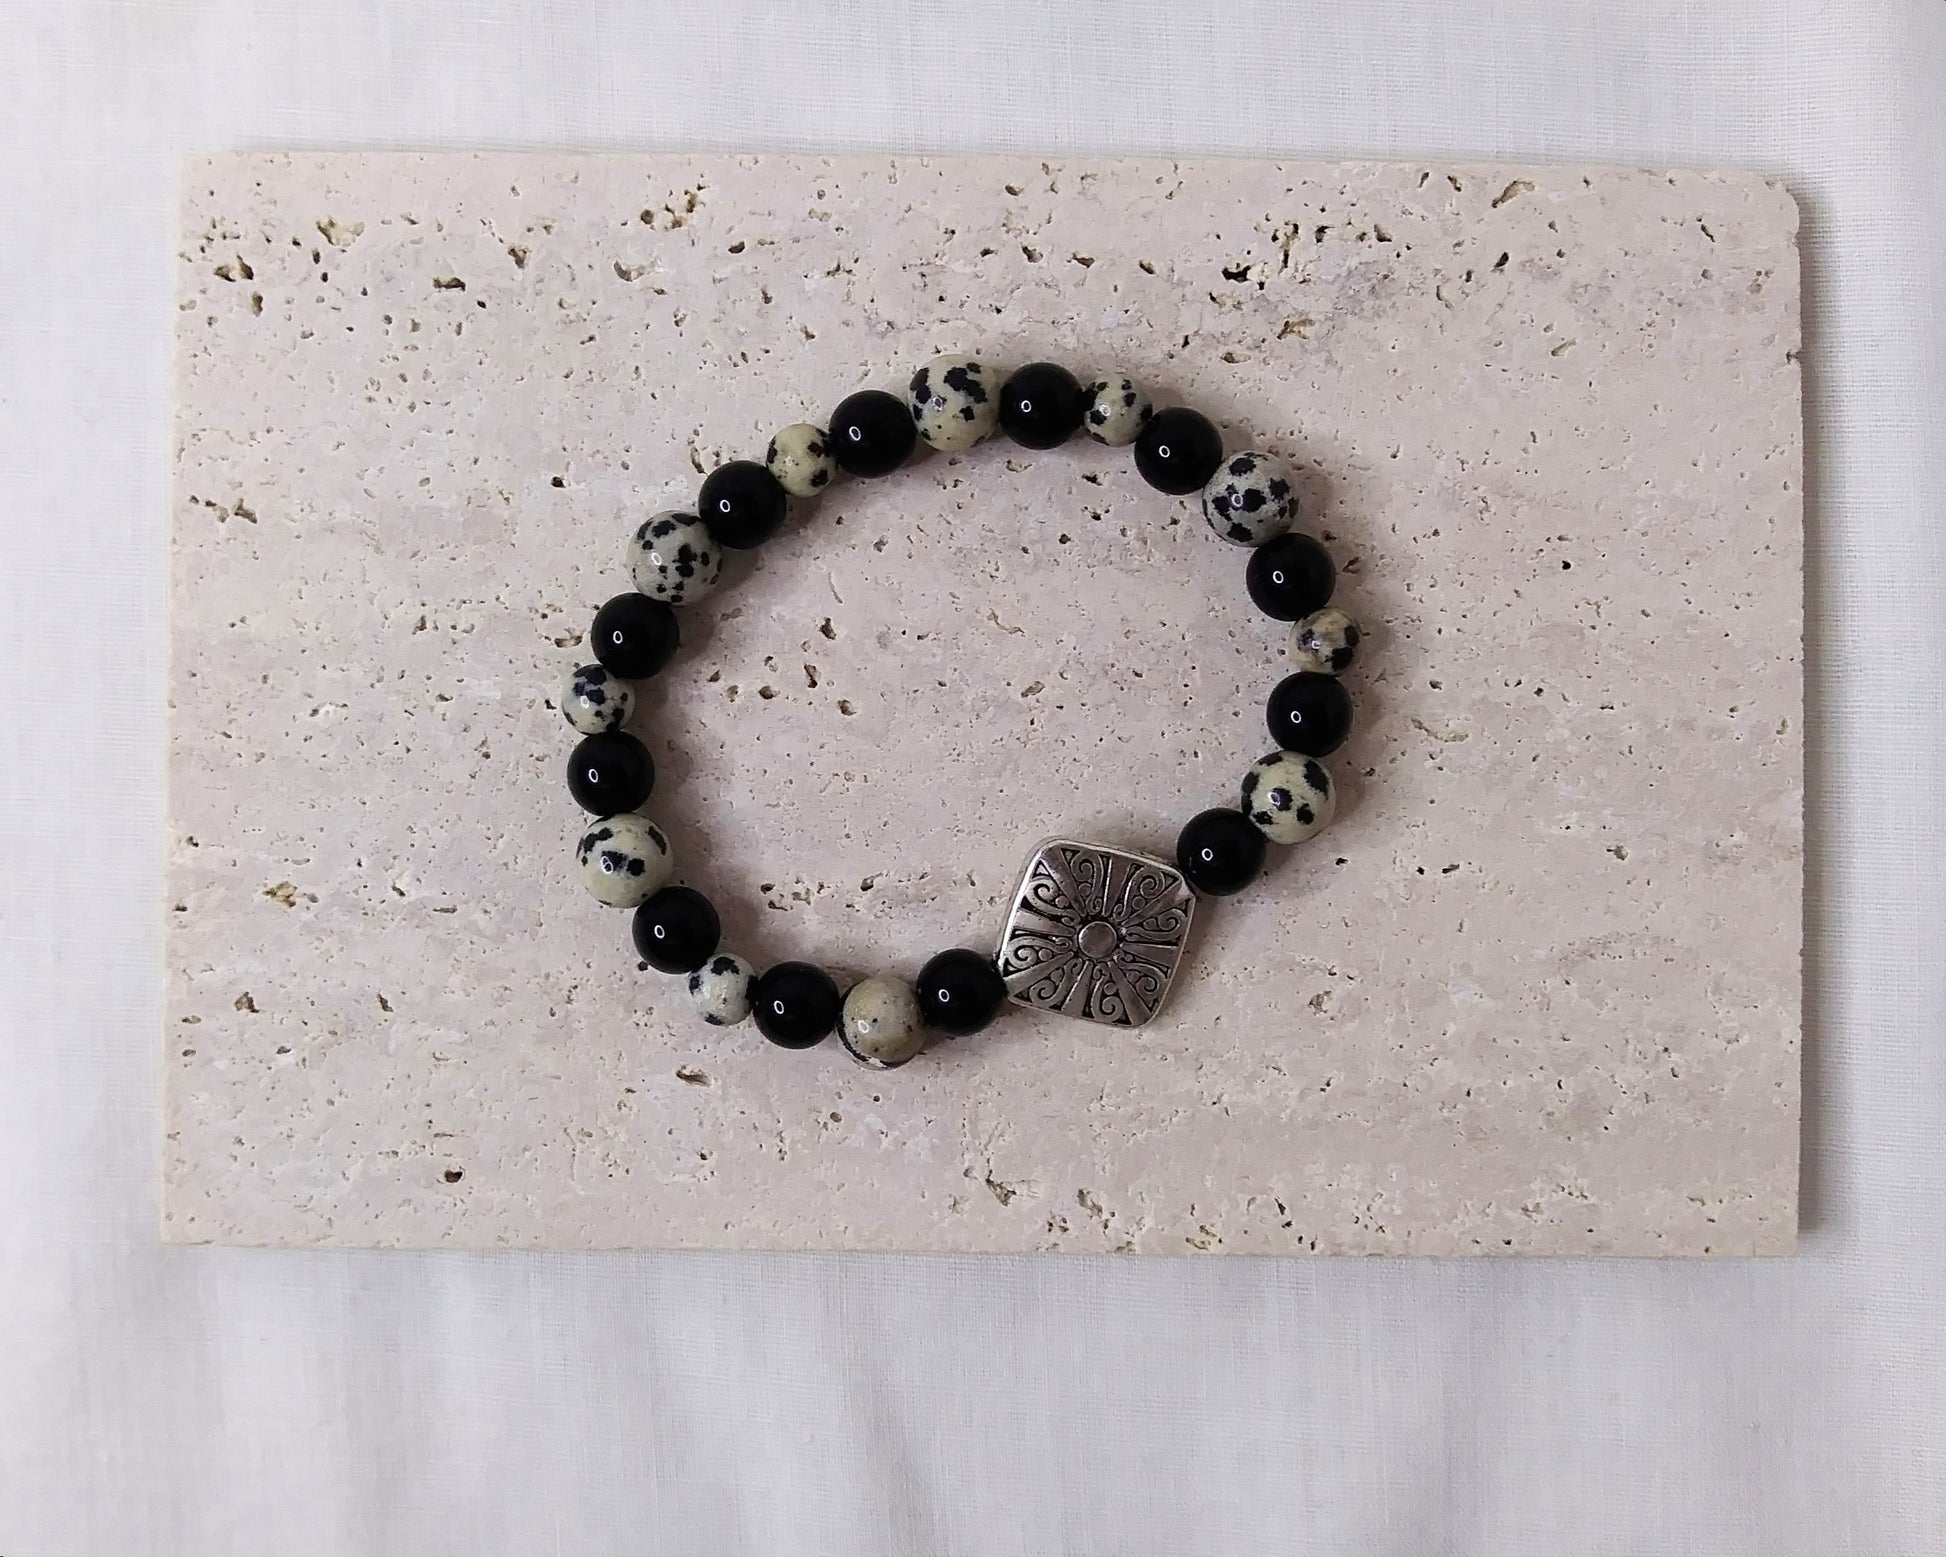 Dalmatian Jasper Beads, Sterling silver-plated bead, Black plastic beads stretch stackable bracelet